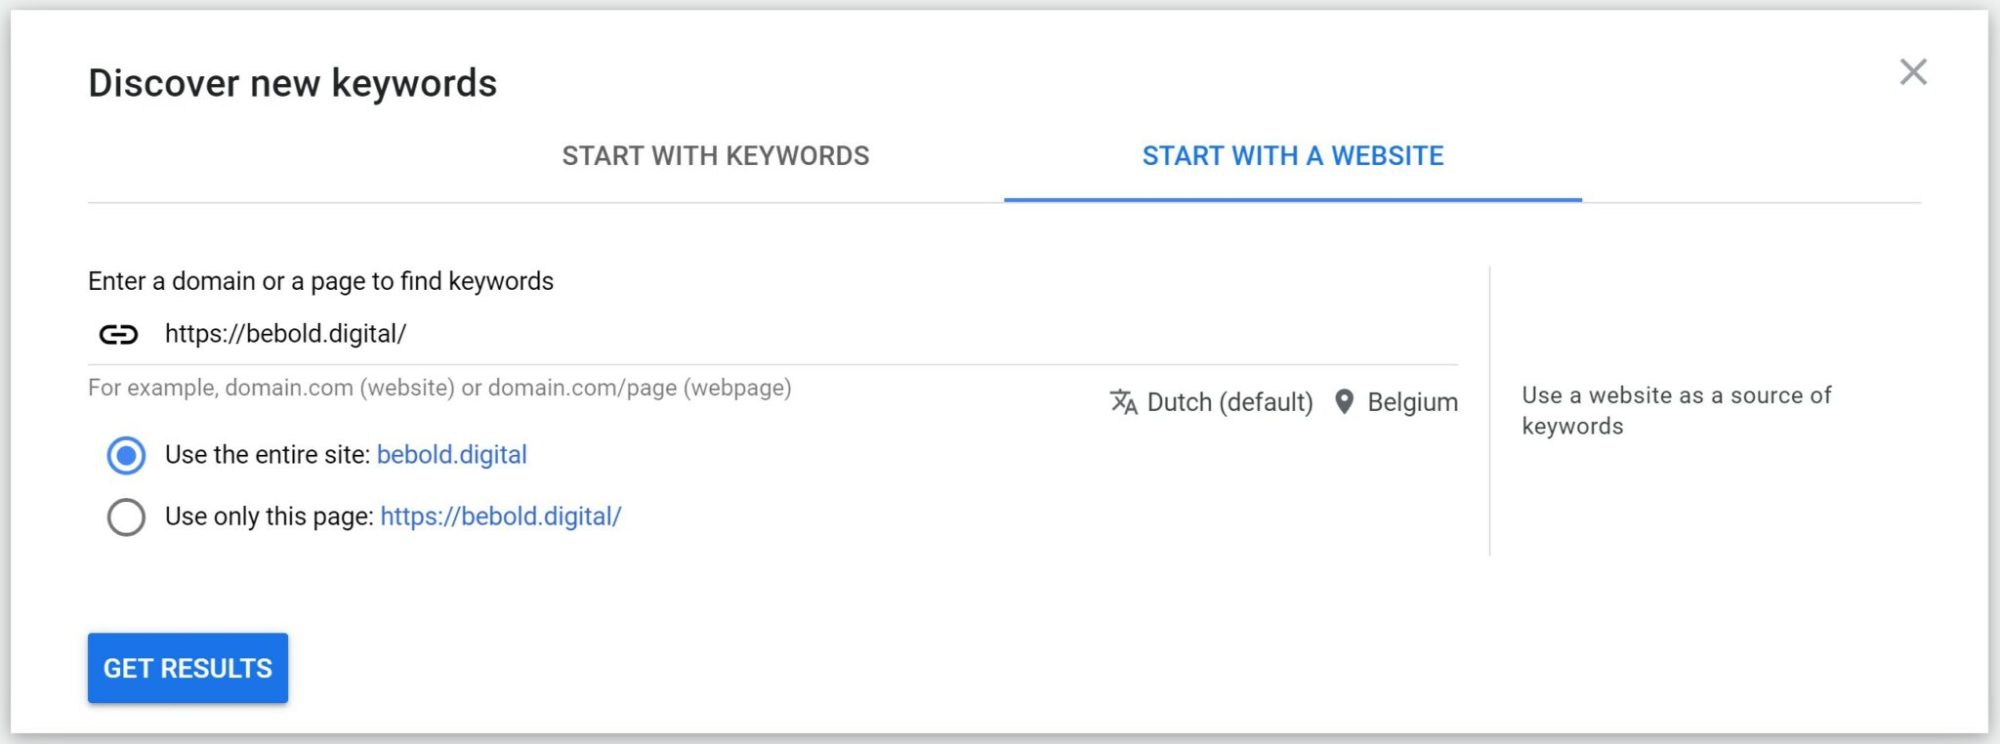 Google Ads keyword analysis - start with a website